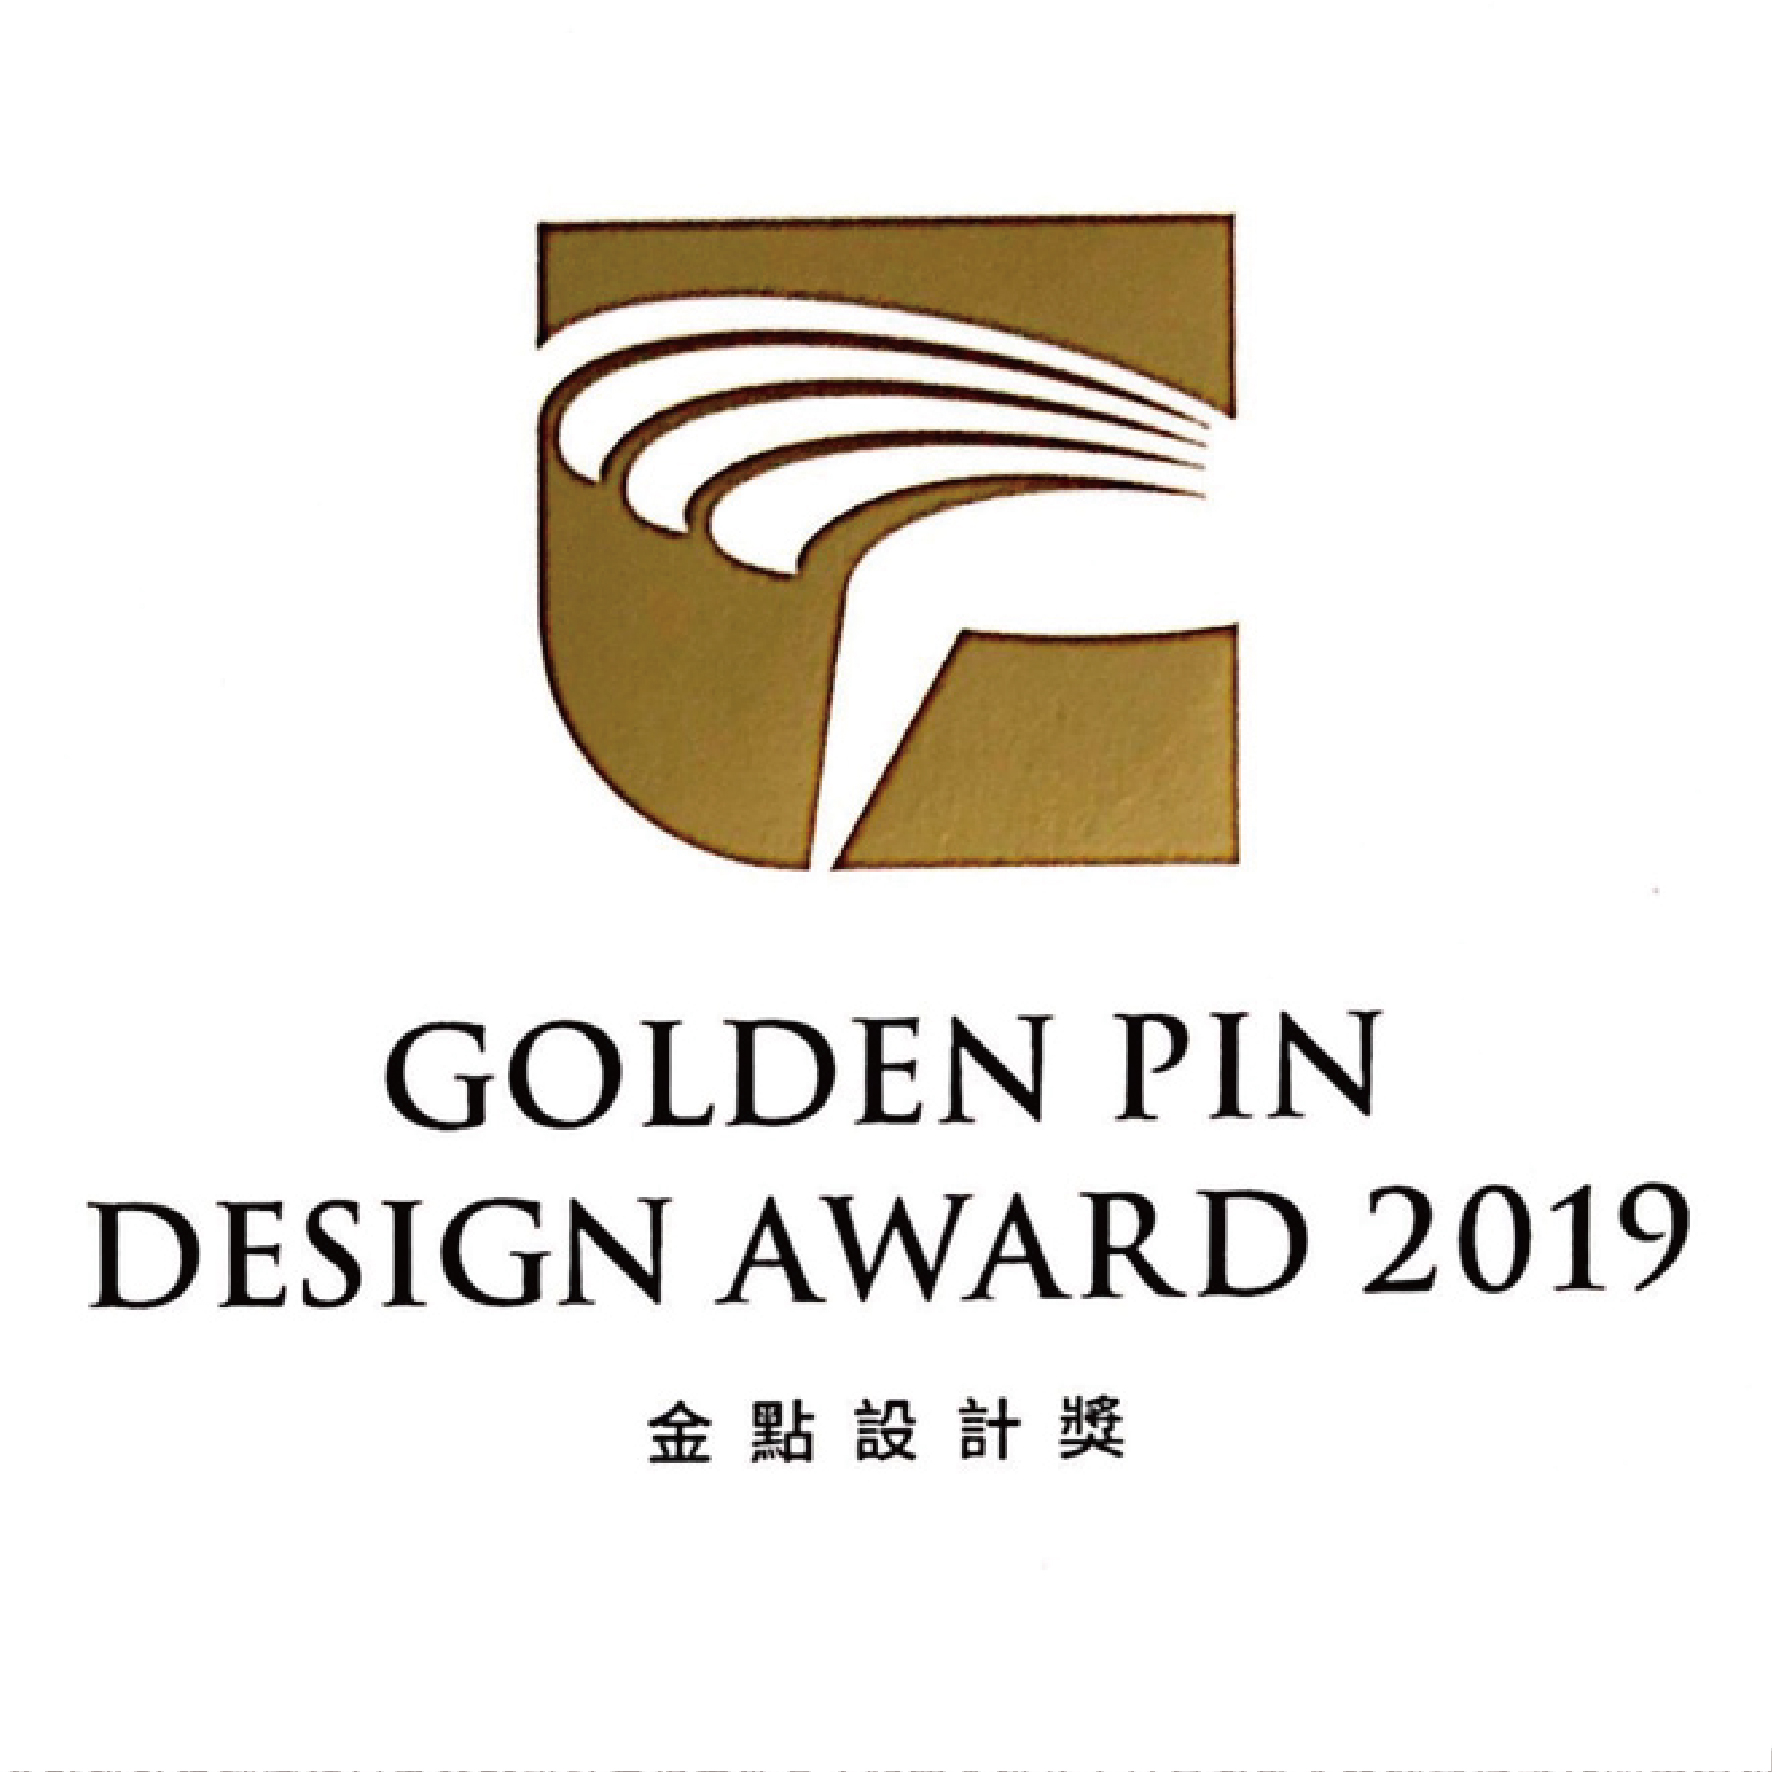 GOLDEN PIN DESIGN AWARD 2019